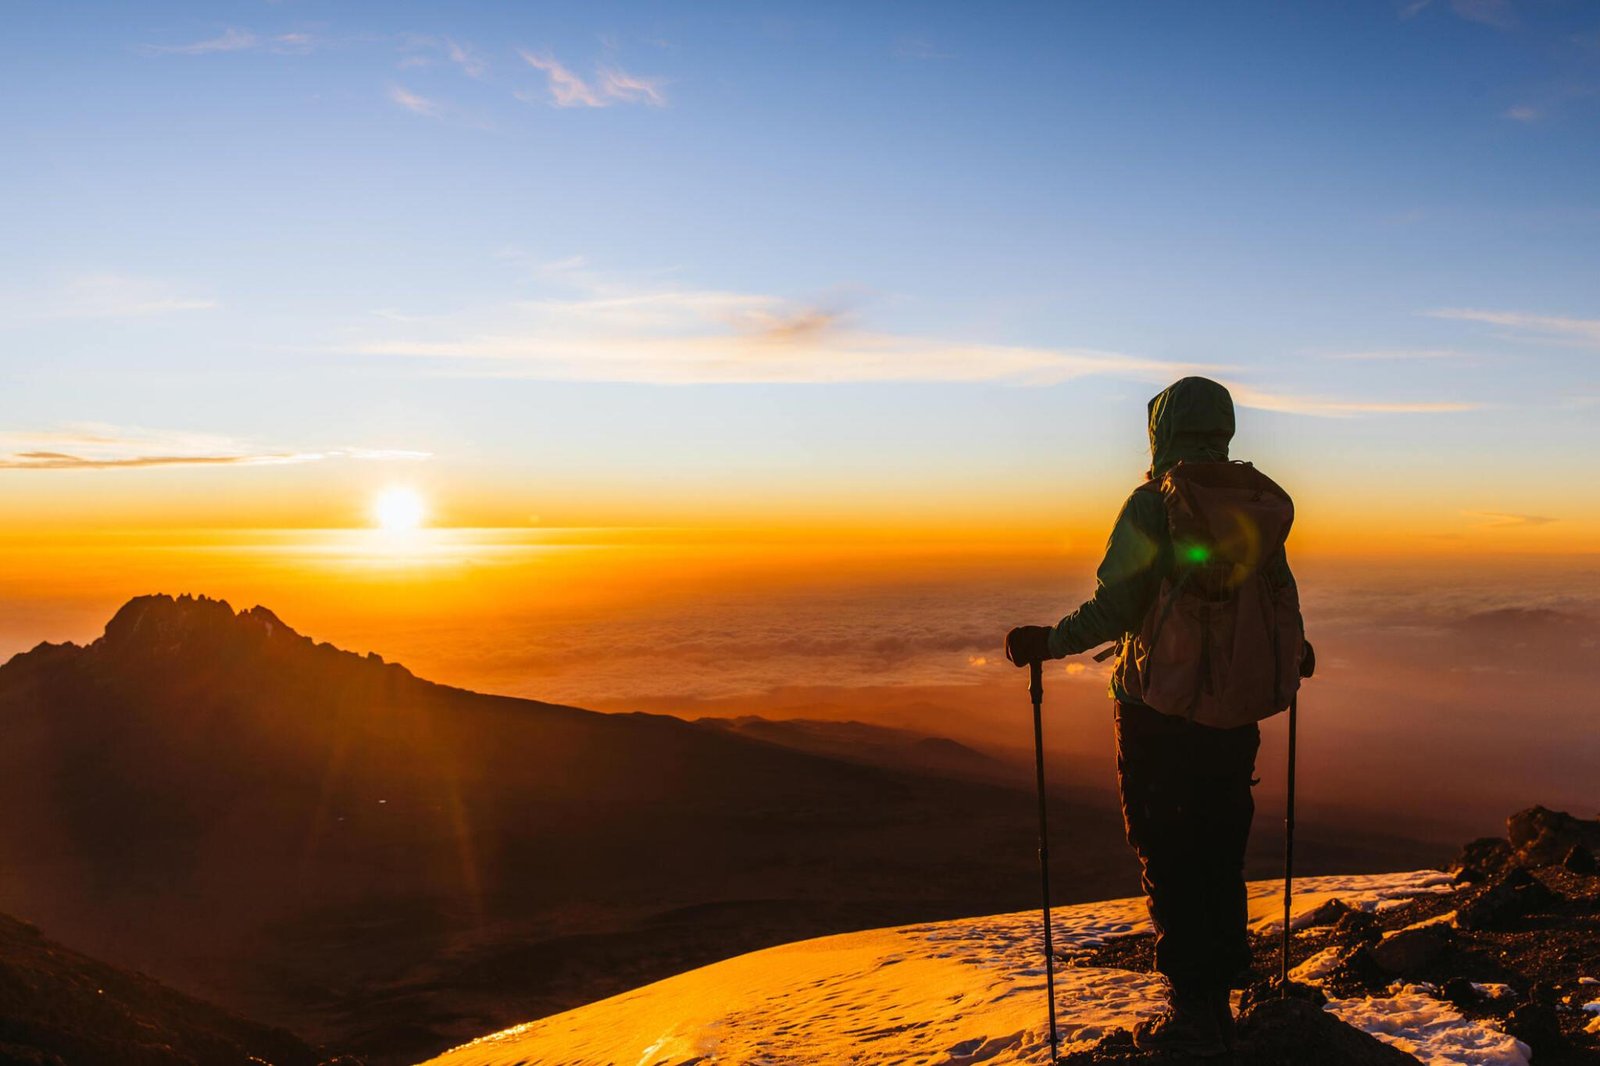 Can a beginner climb Kilimanjaro?